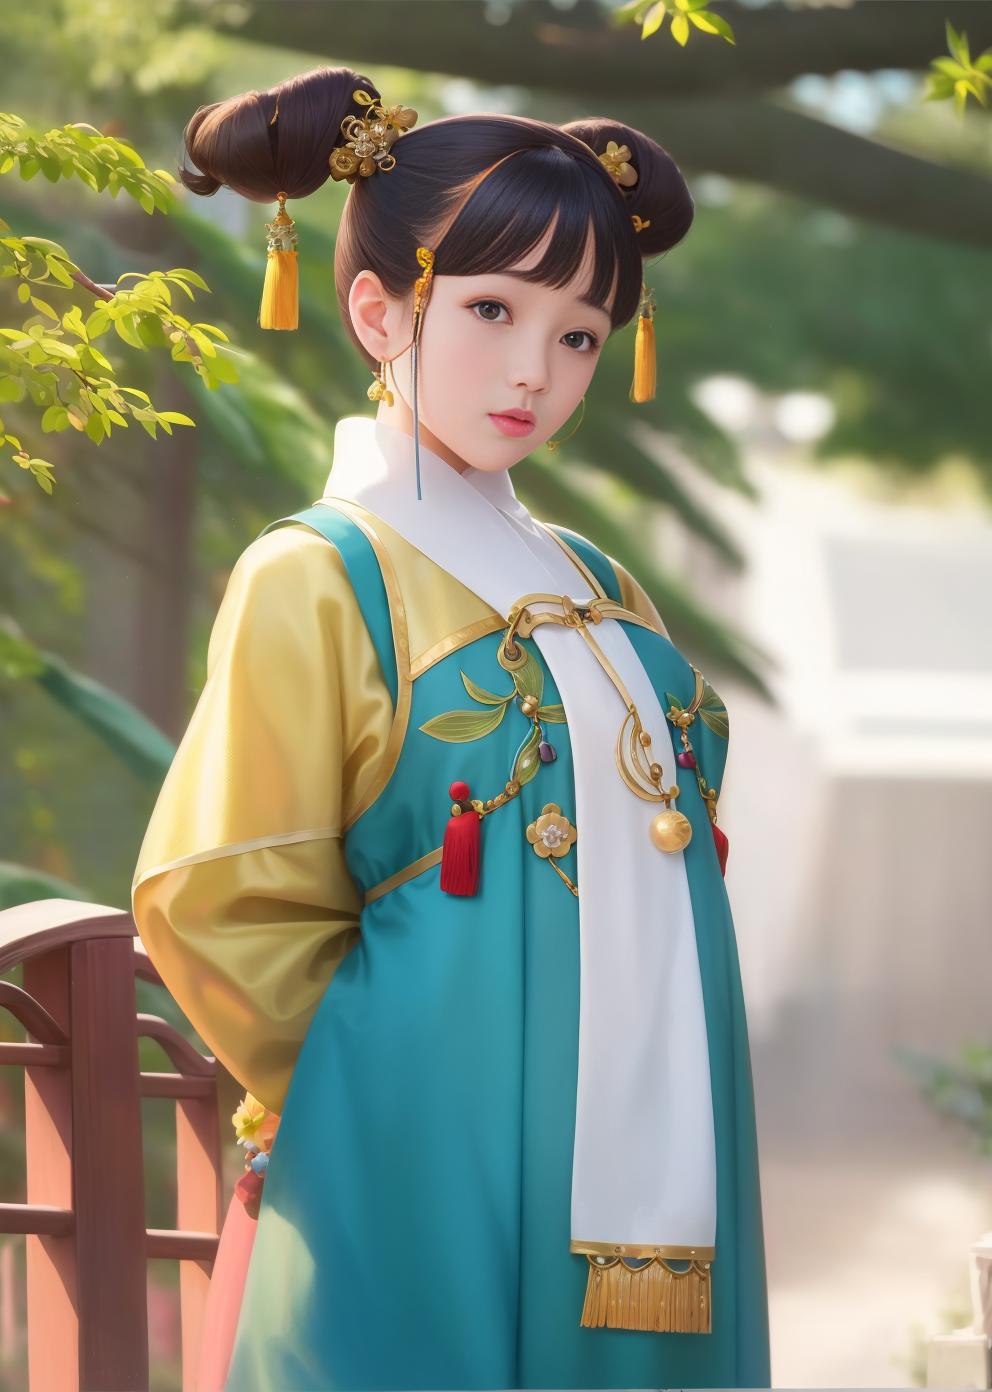 Qing Period Dresses - 清代后宫服 image by Nitram